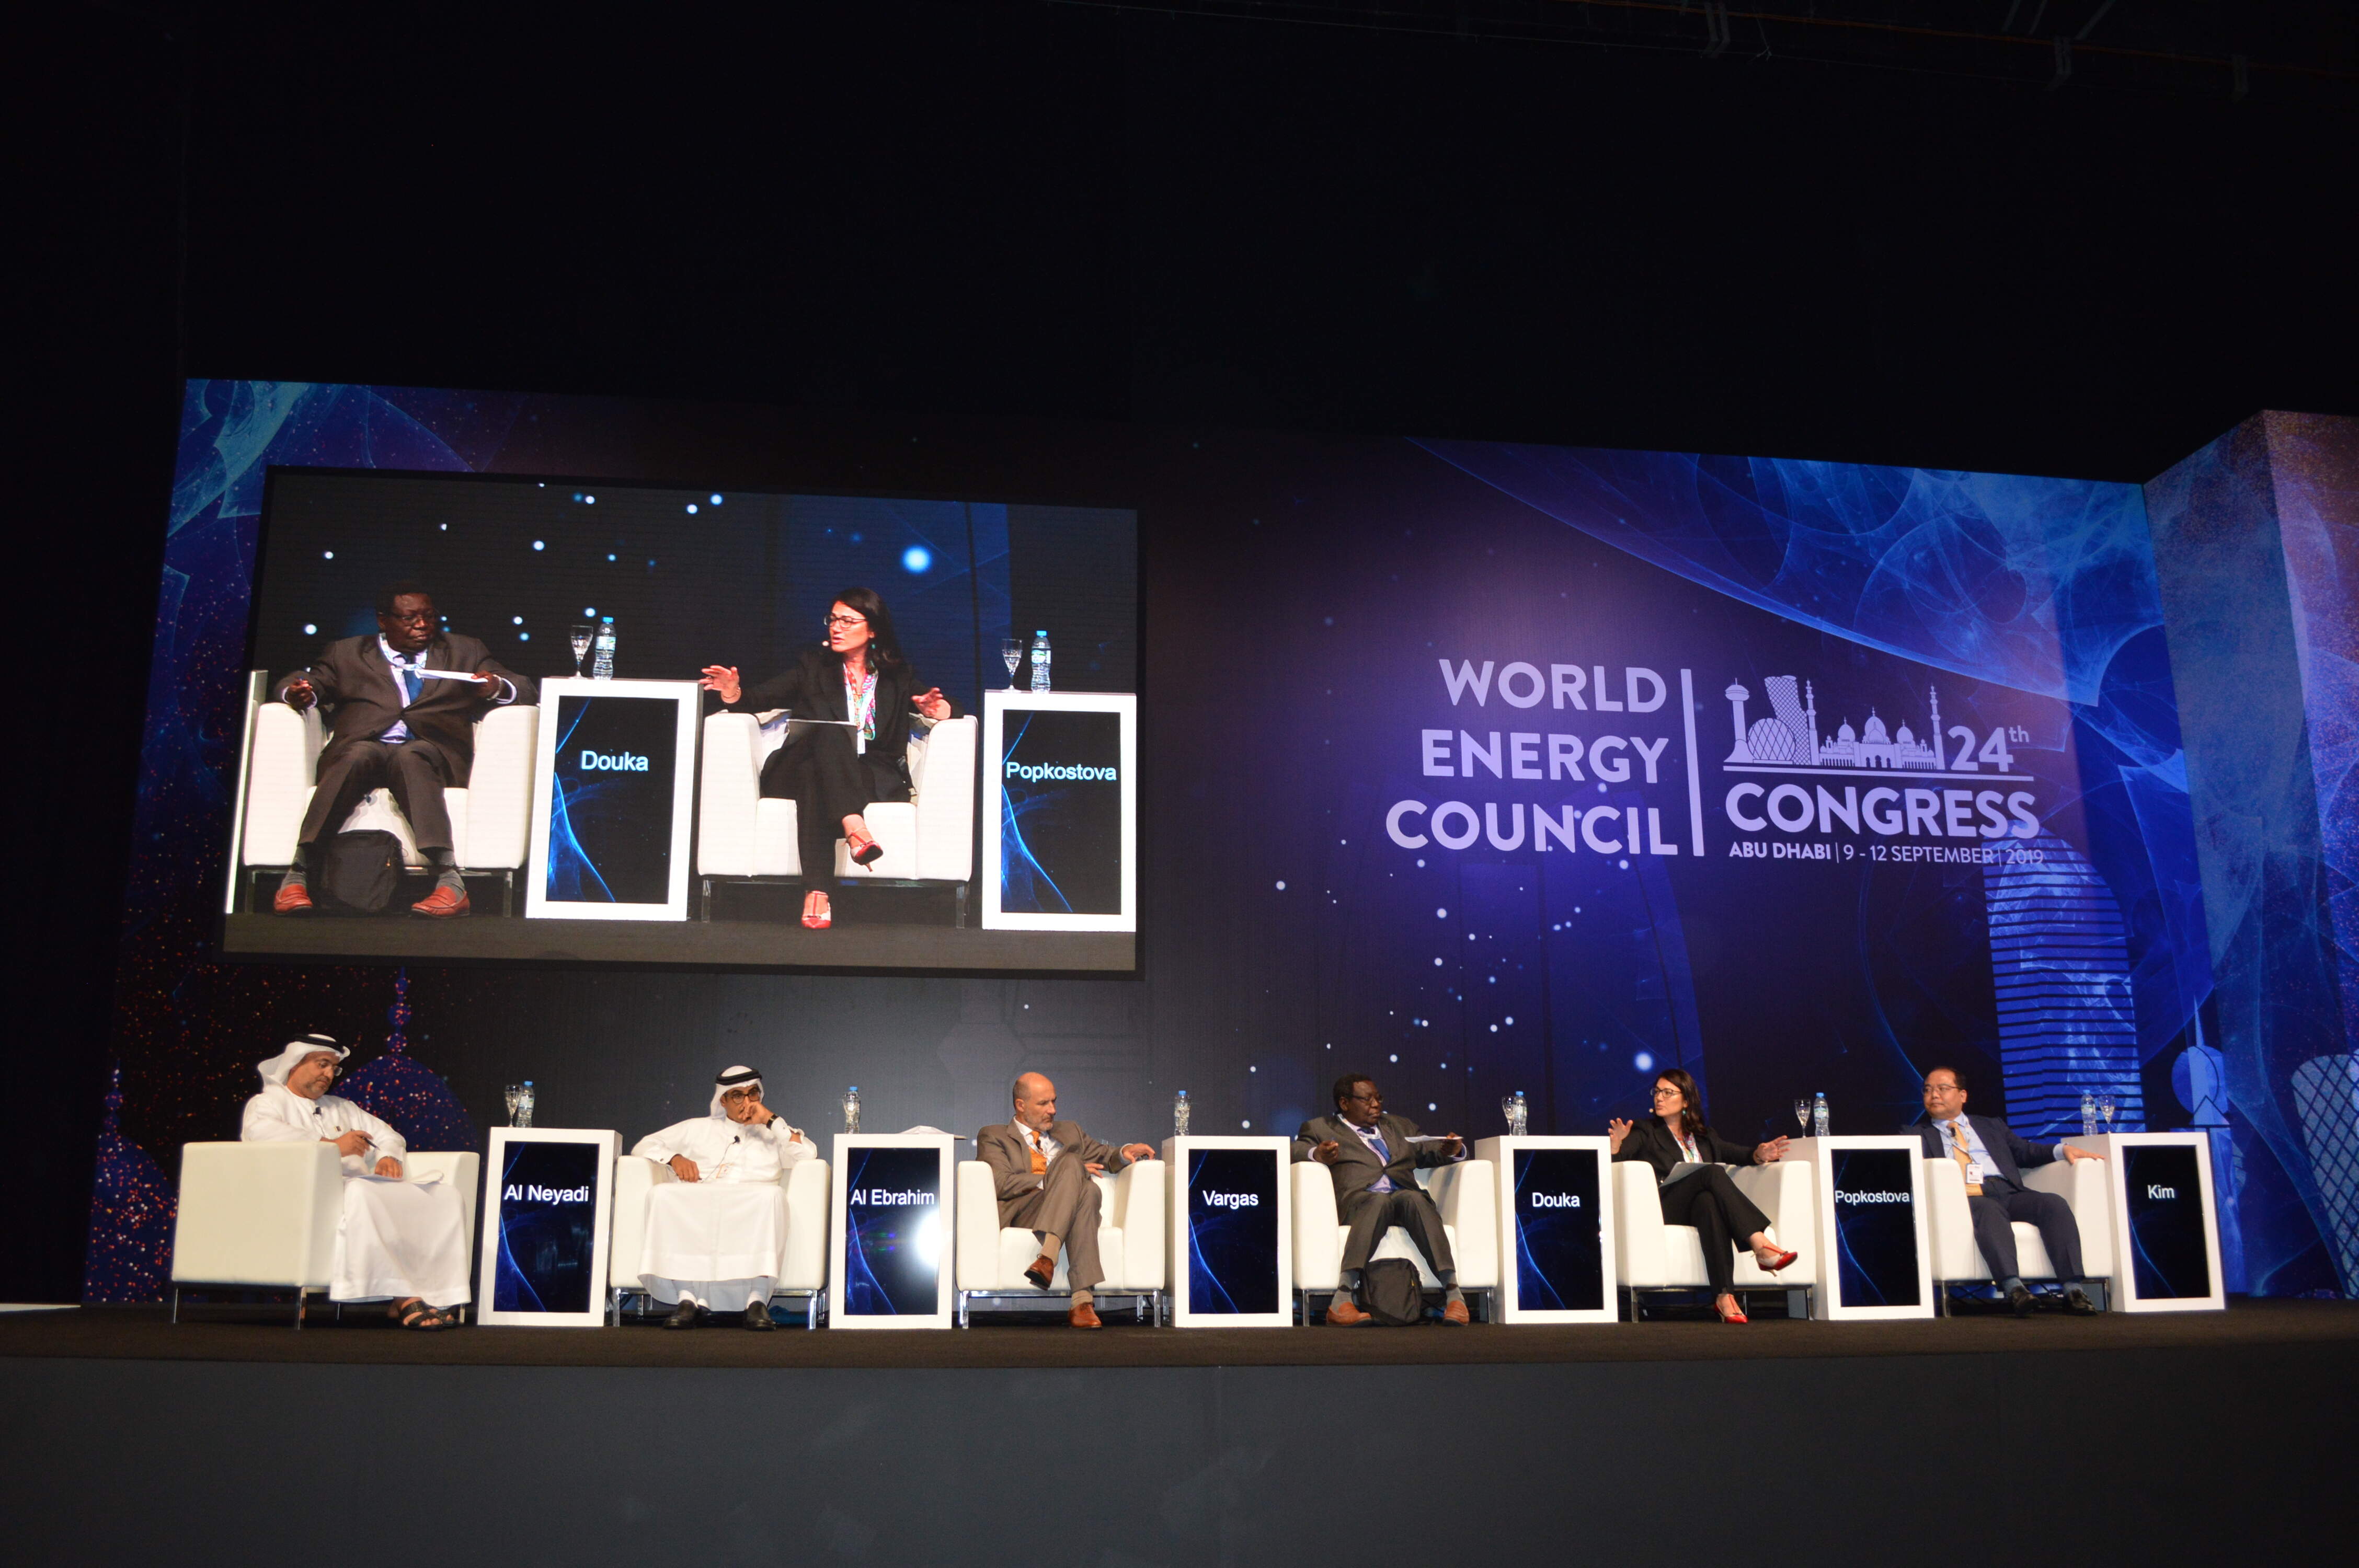 Yana Popkostova, 24th World Energy Congress, UAE| PANEL: Progressing the vision for regional integra